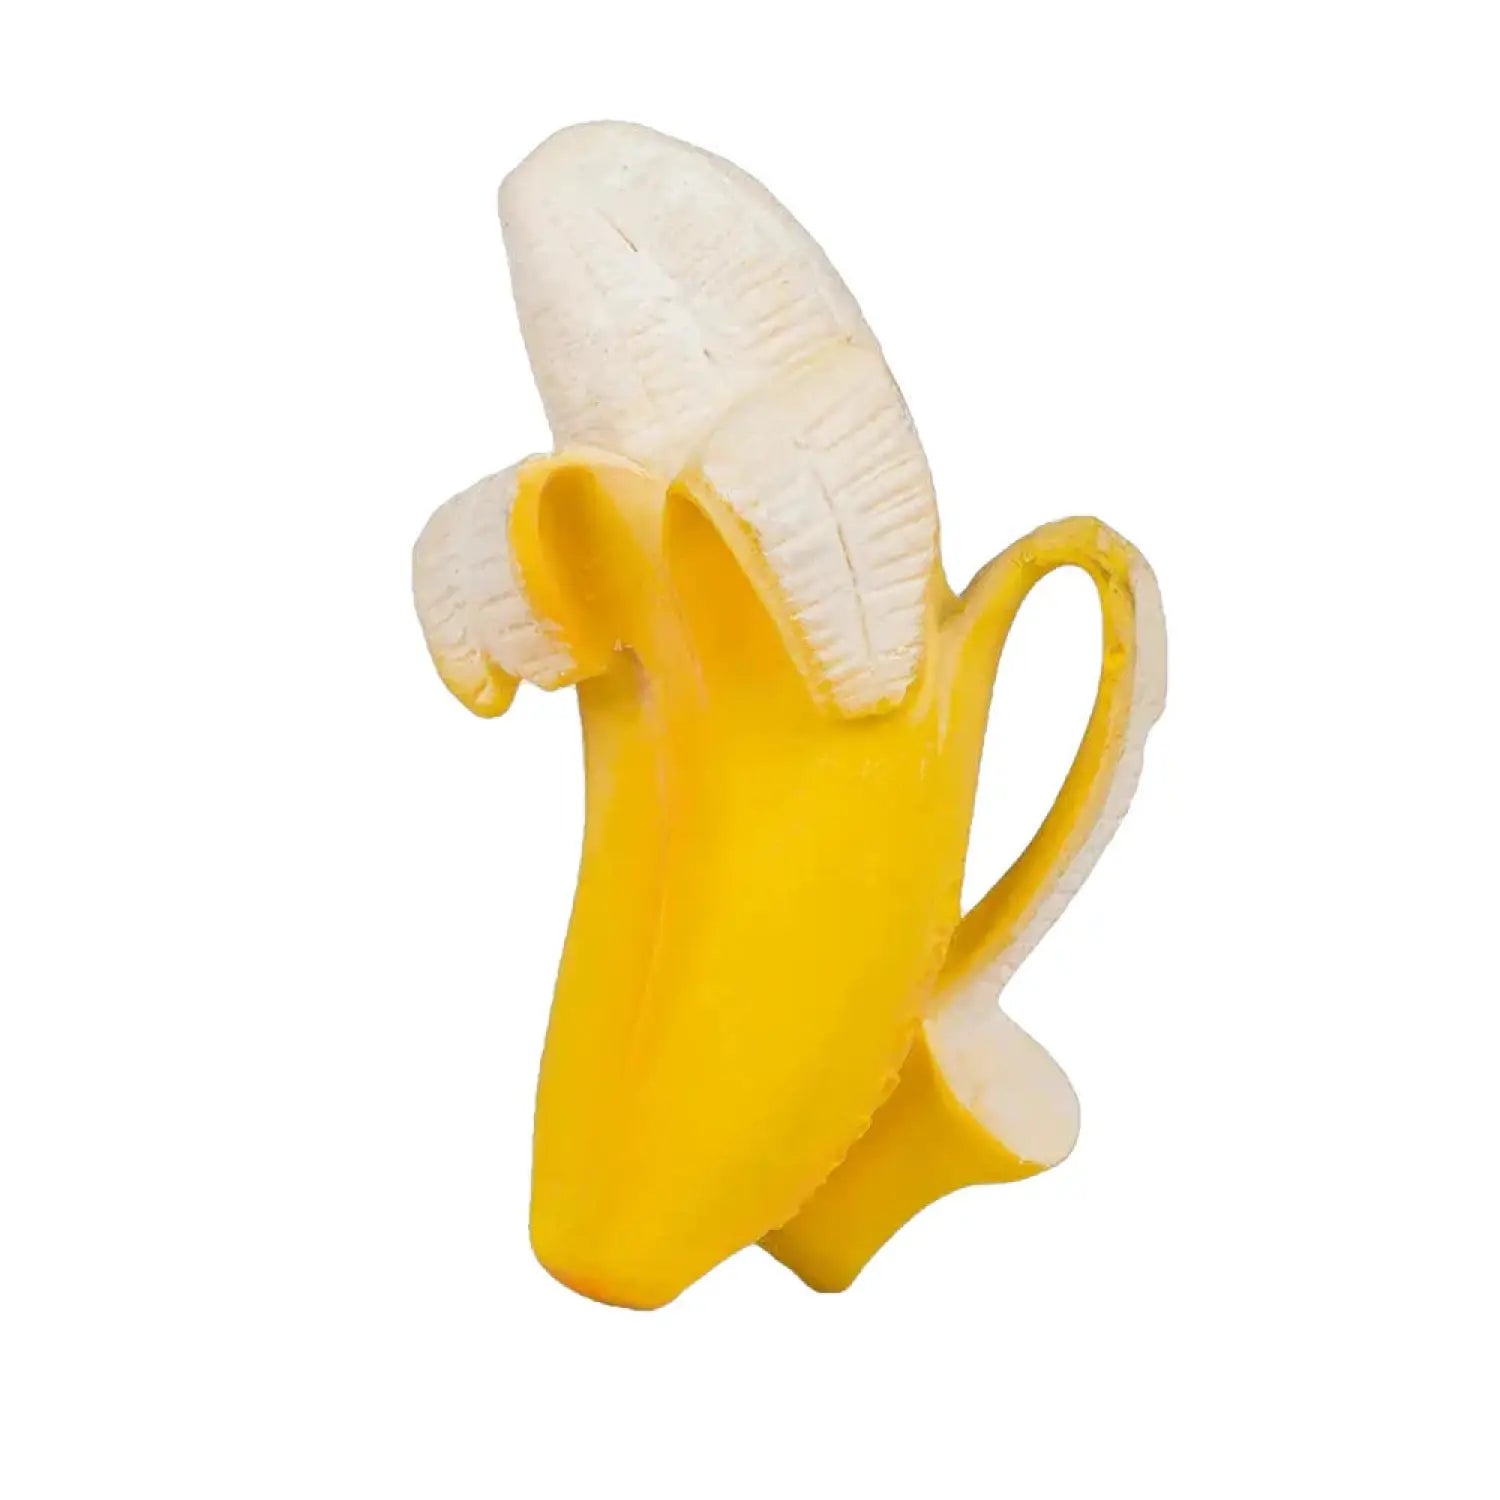 Oli & Carol Fruit & Veggie Baby Teether Toy - Ana Banana. Yellow and cream colored banana teether.